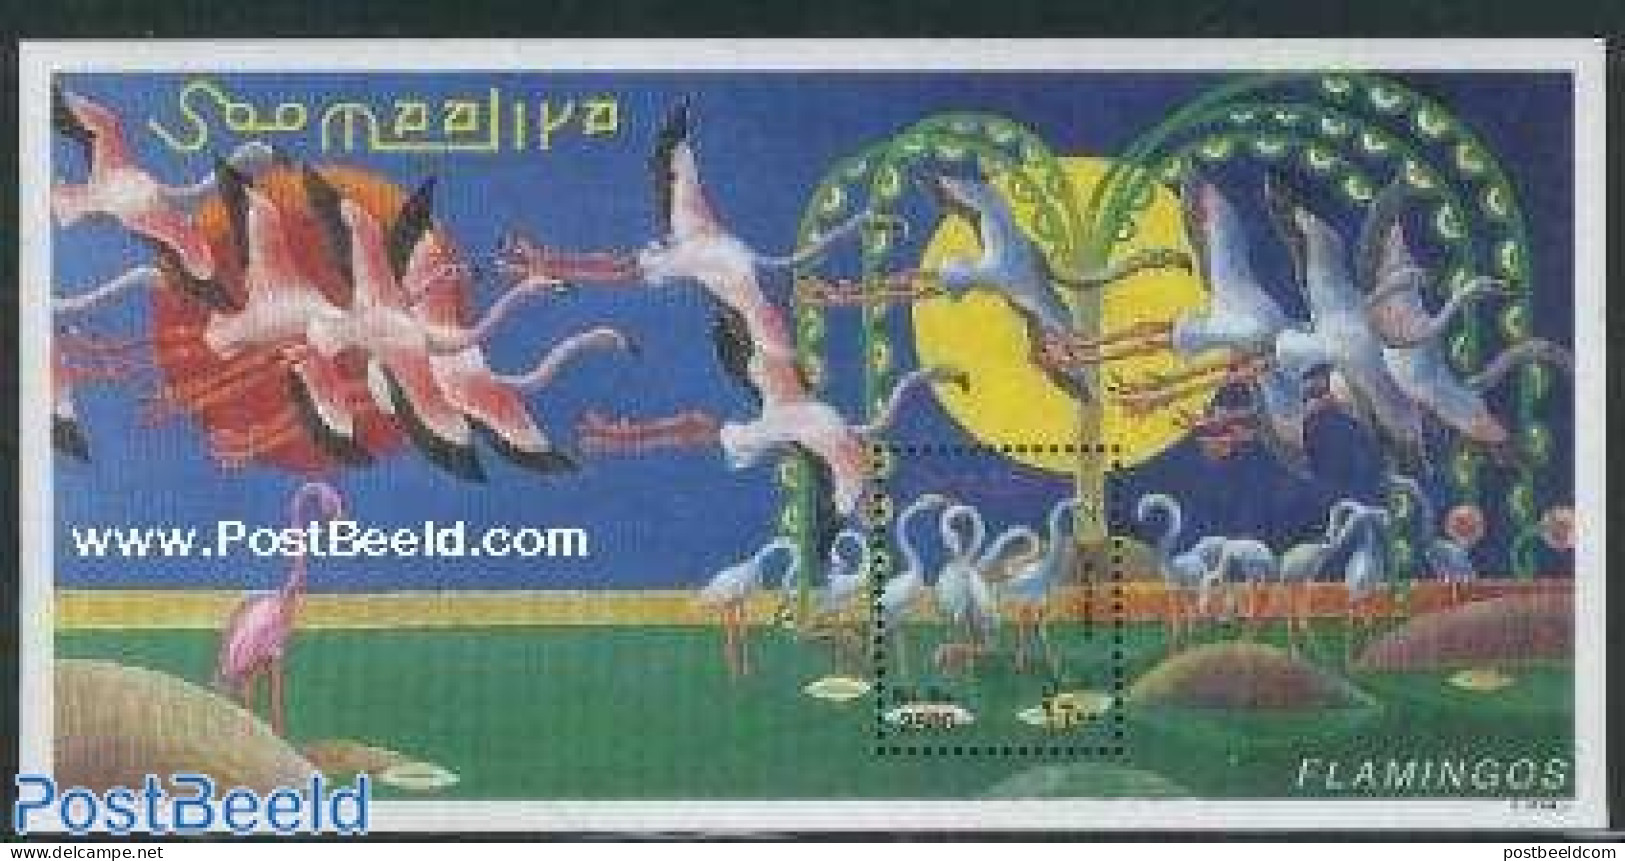 Somalia 1998 Flamingo S/s, Mint NH, Nature - Birds - Somalie (1960-...)